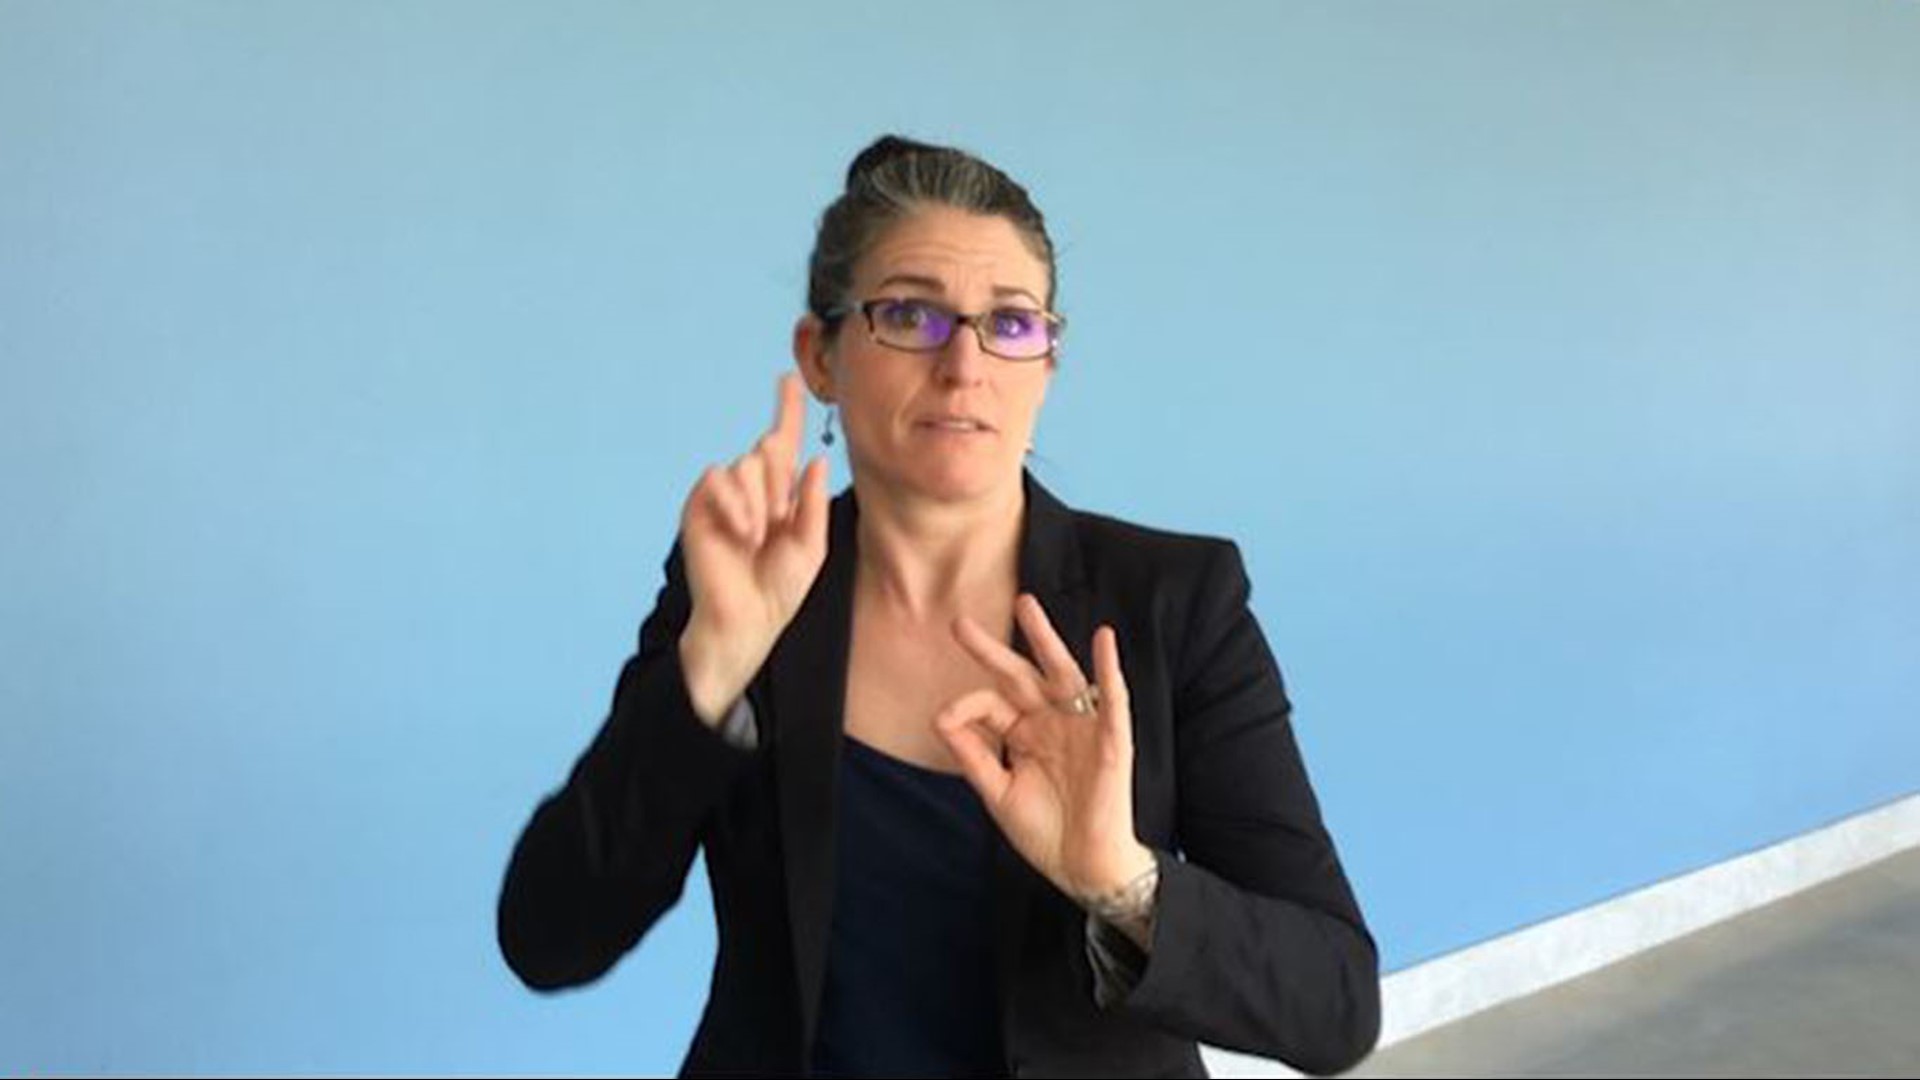 american sign language interpreting